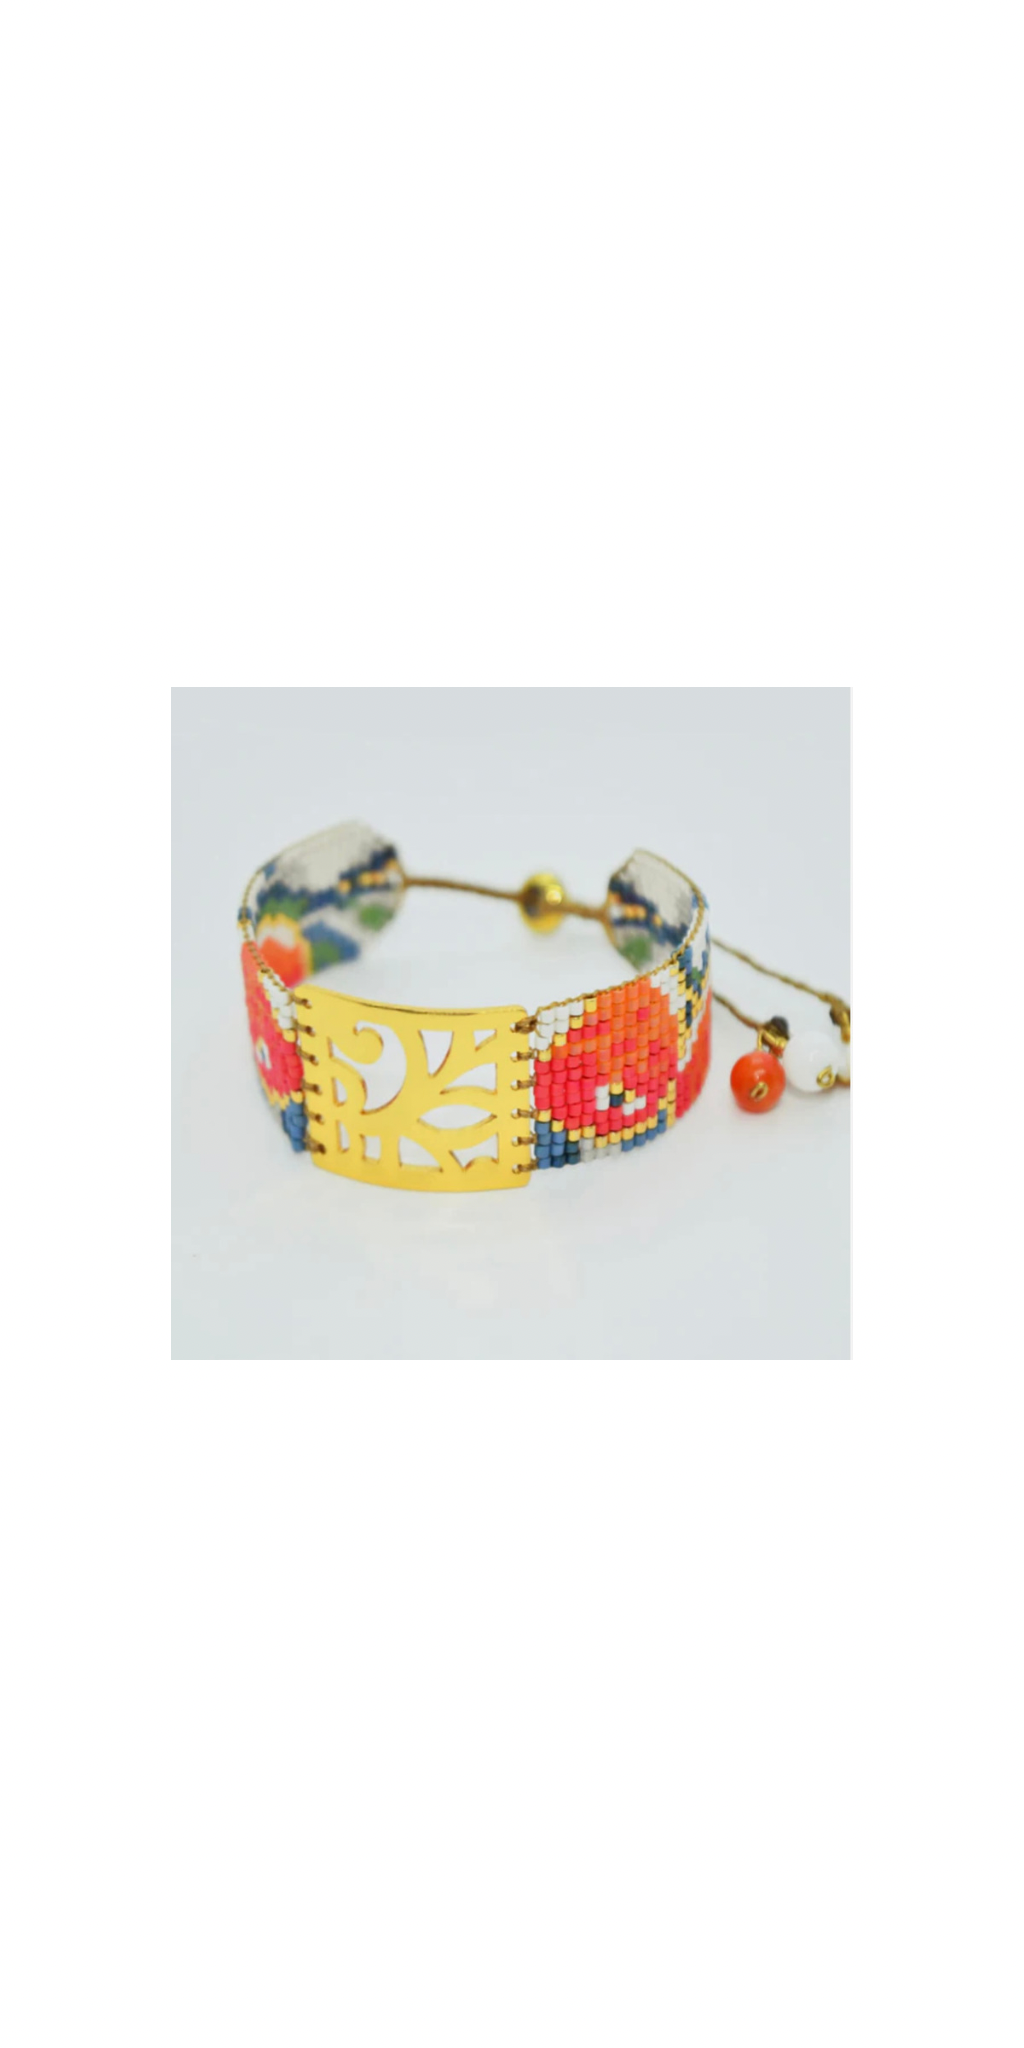 Maui bracelet